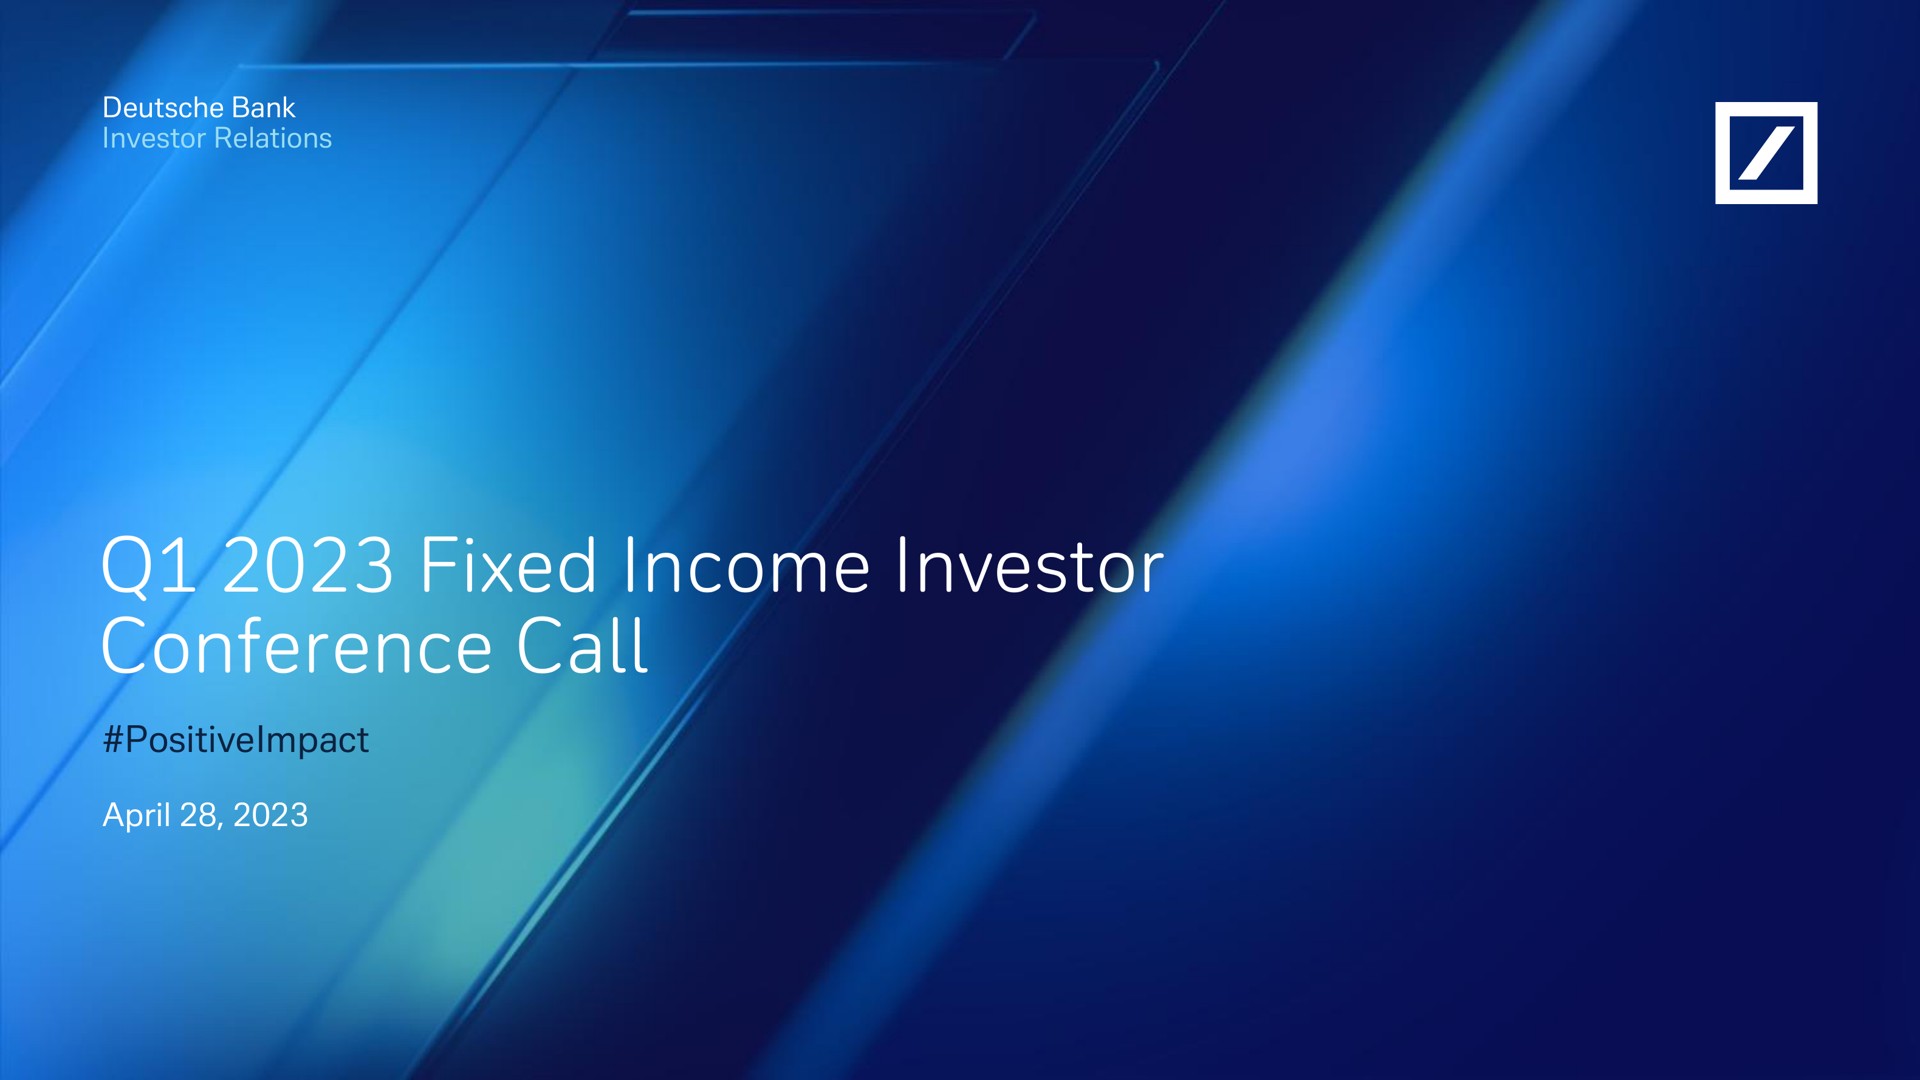 fixed income investor conference call | Deutsche Bank